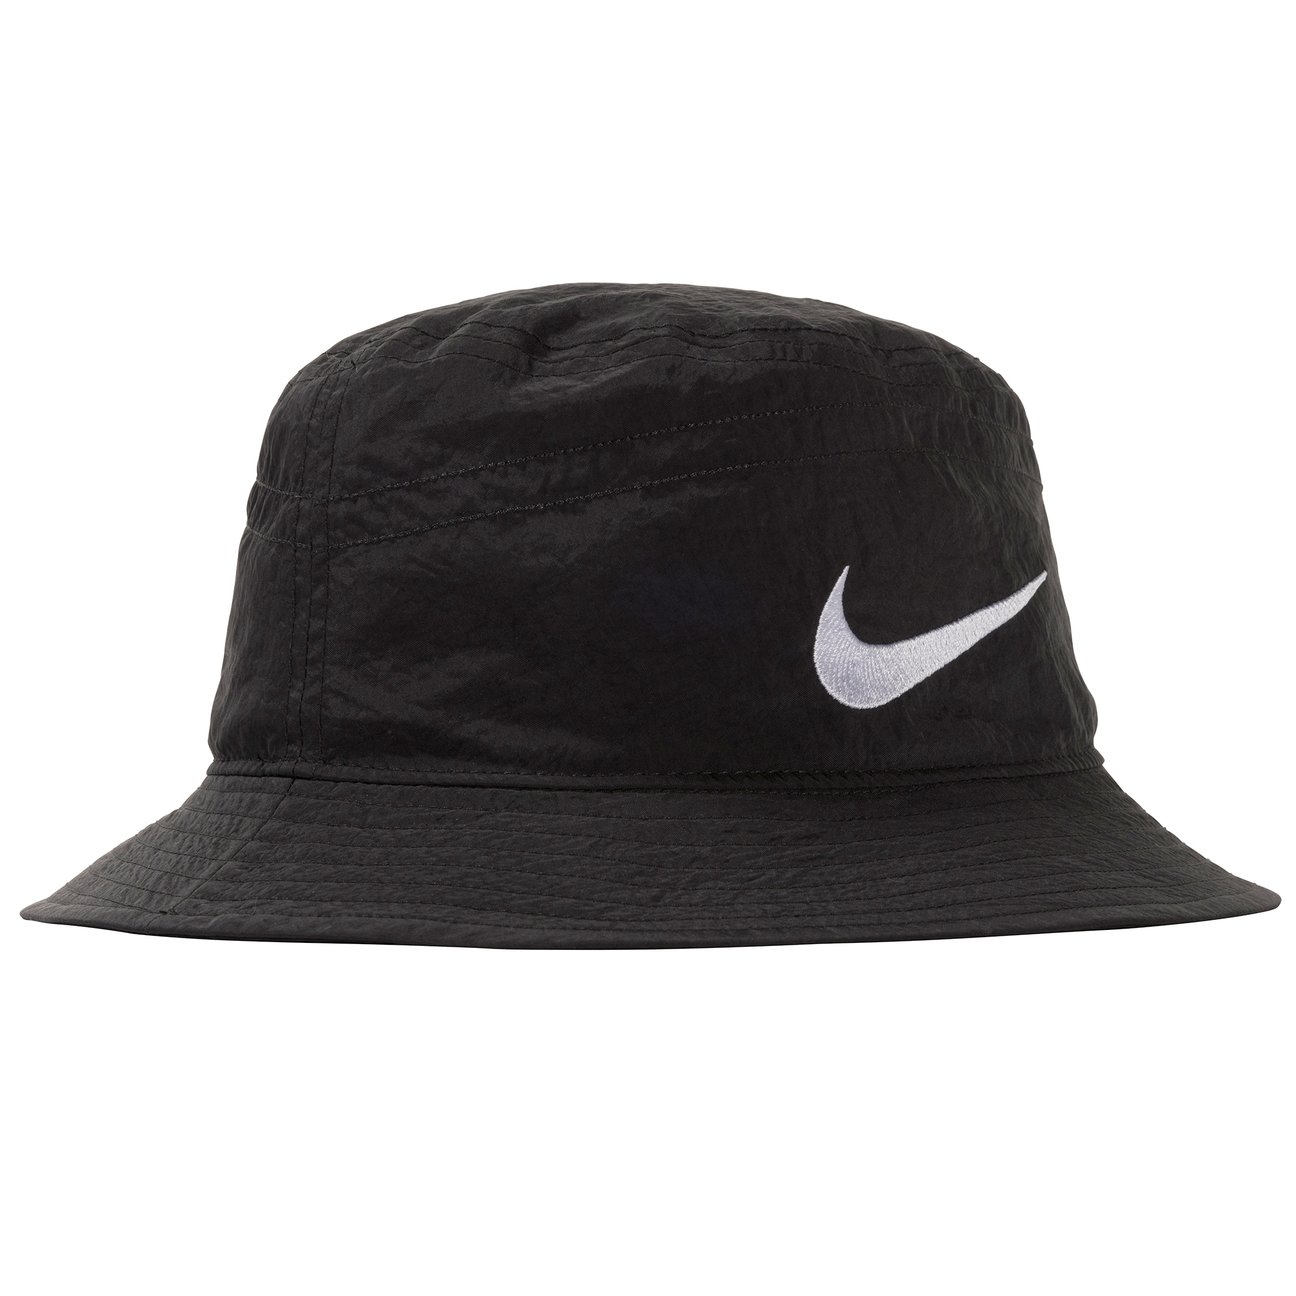 Nike x Stussy Bucket Hat Black - Novelship